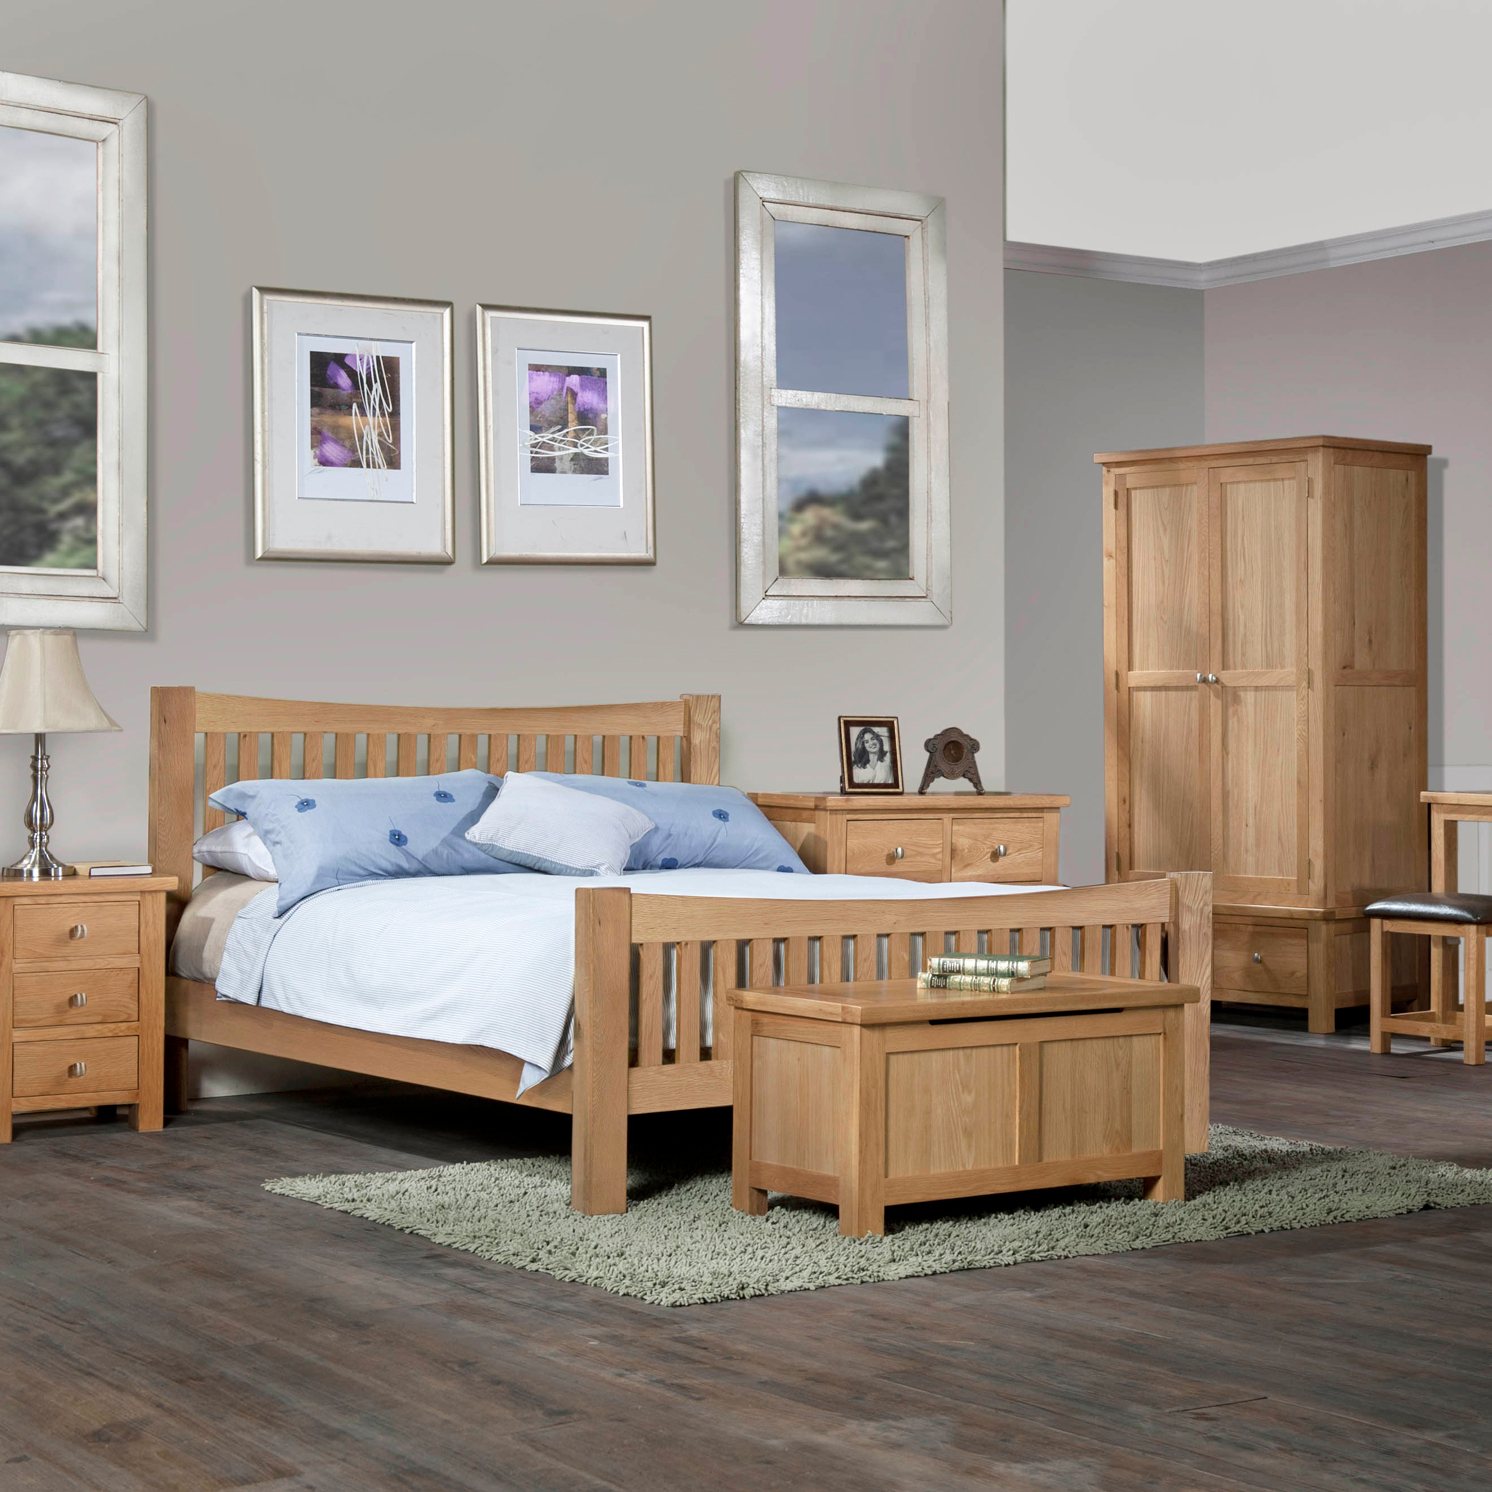 Bristol Oak bedroom furniture